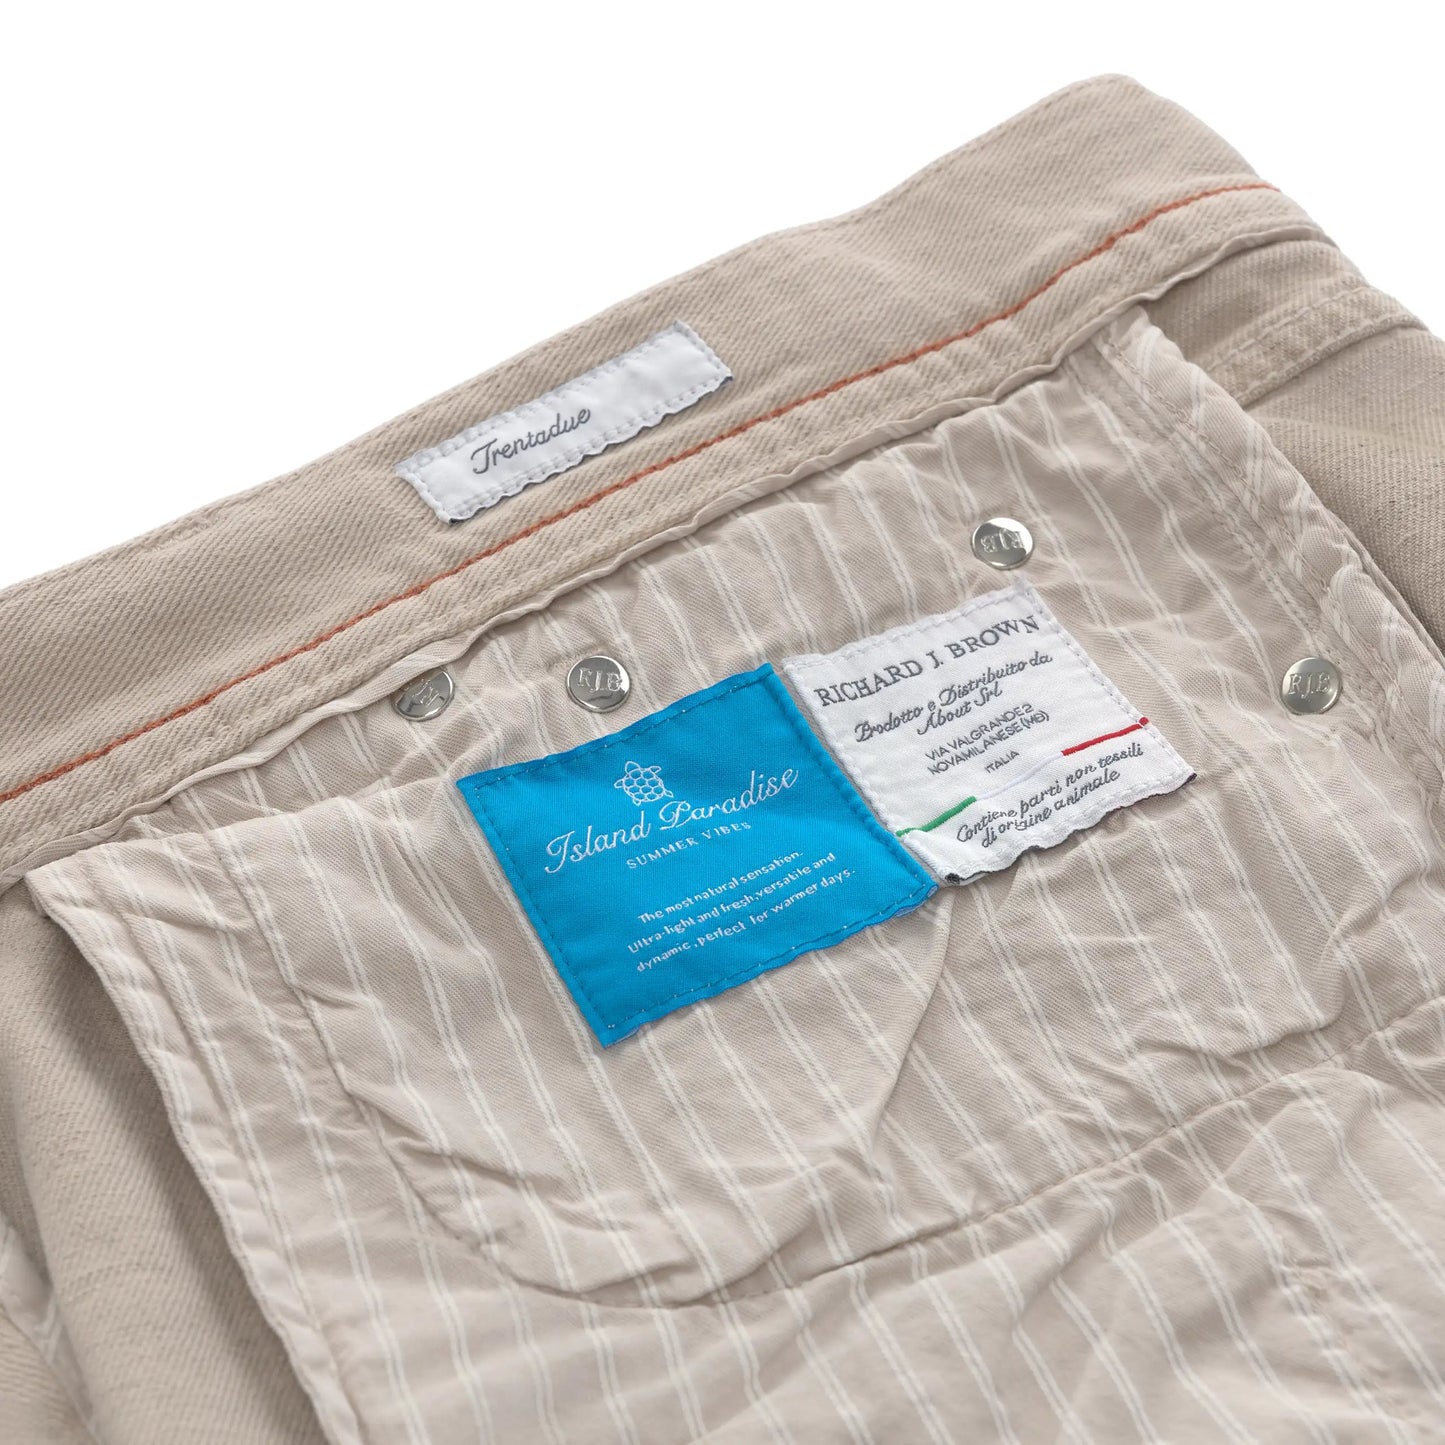 Richard J. Brown Cotton-Linen Blend Jeans in Beige - SARTALE